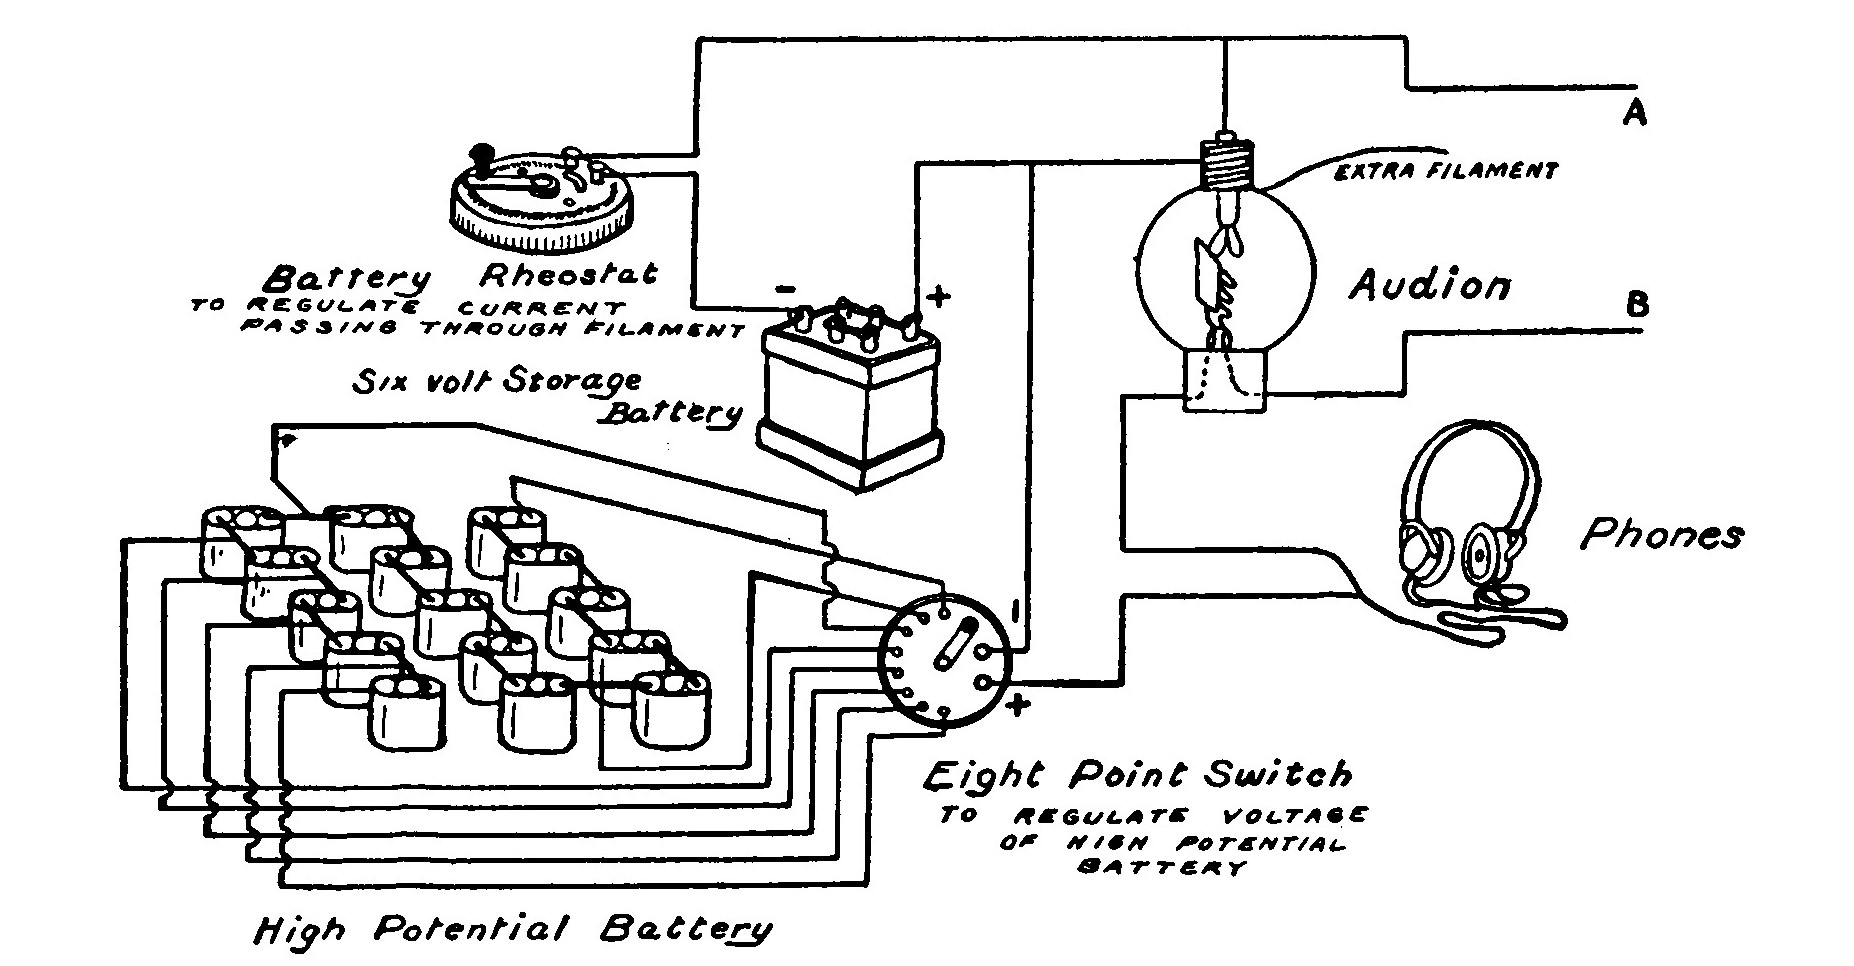 Fig. 166. Audion Circuit.